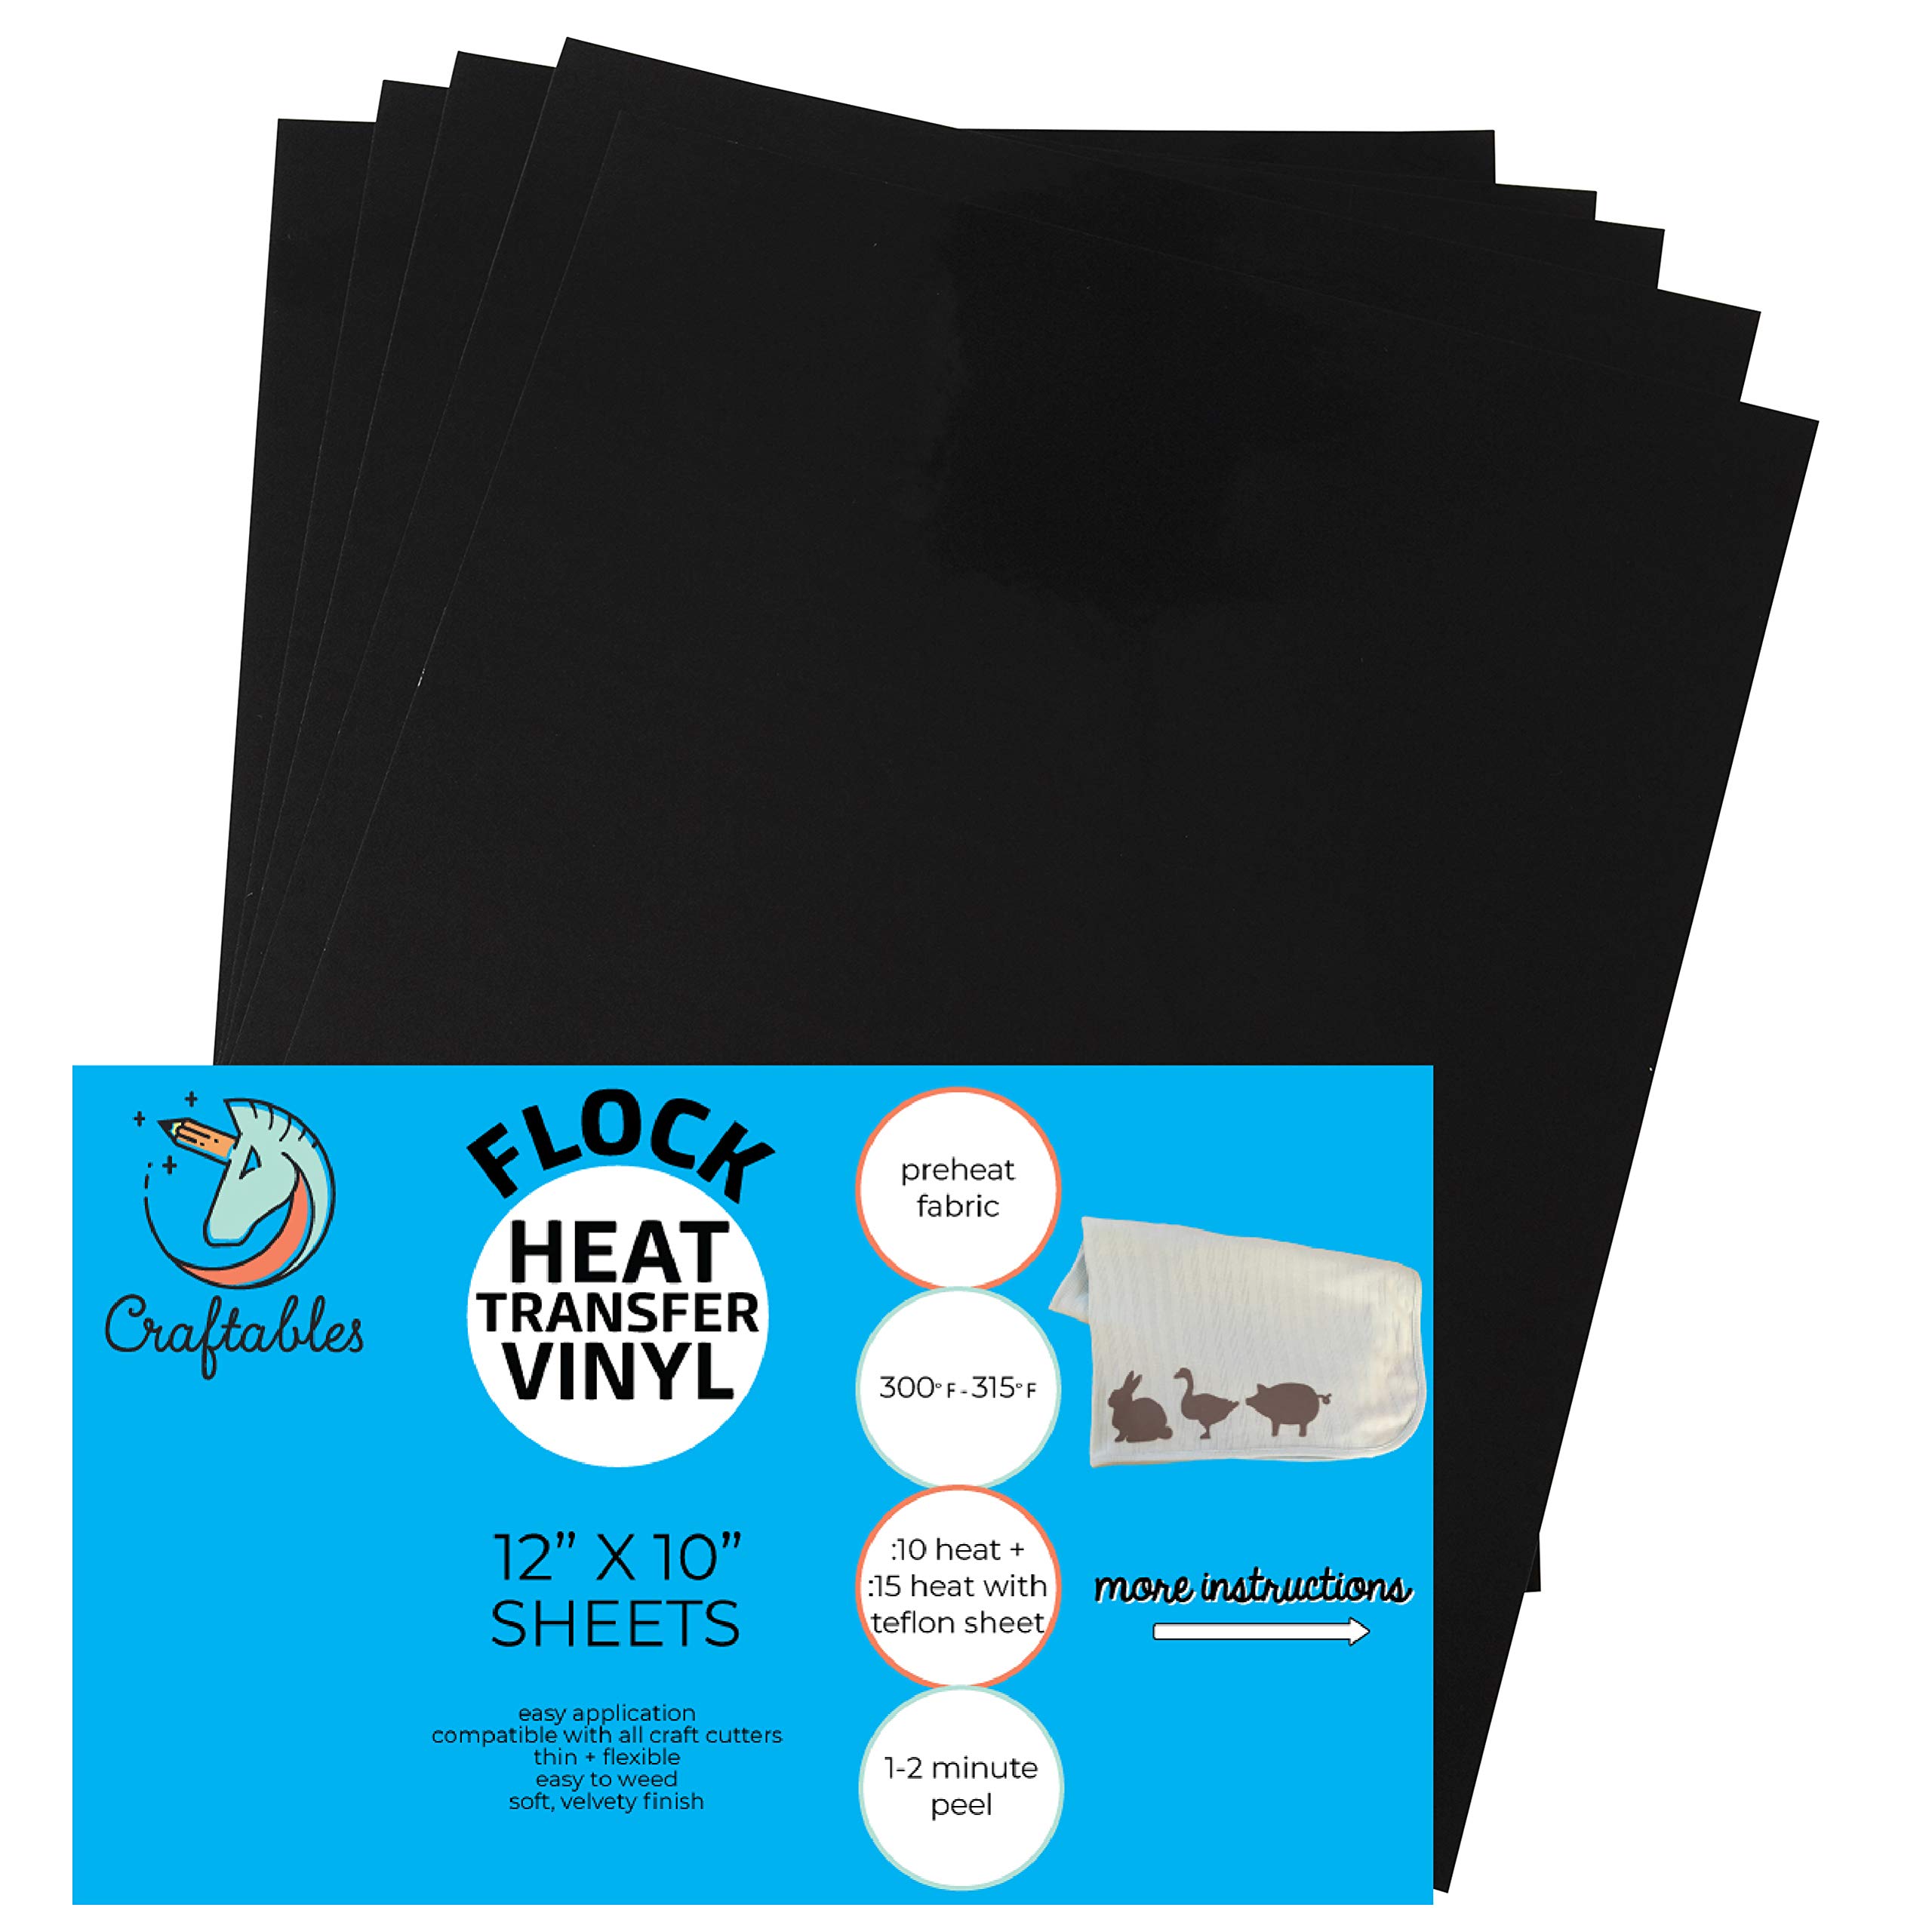 White Heat Transfer Vinyl Rolls By Craftables – shopcraftables